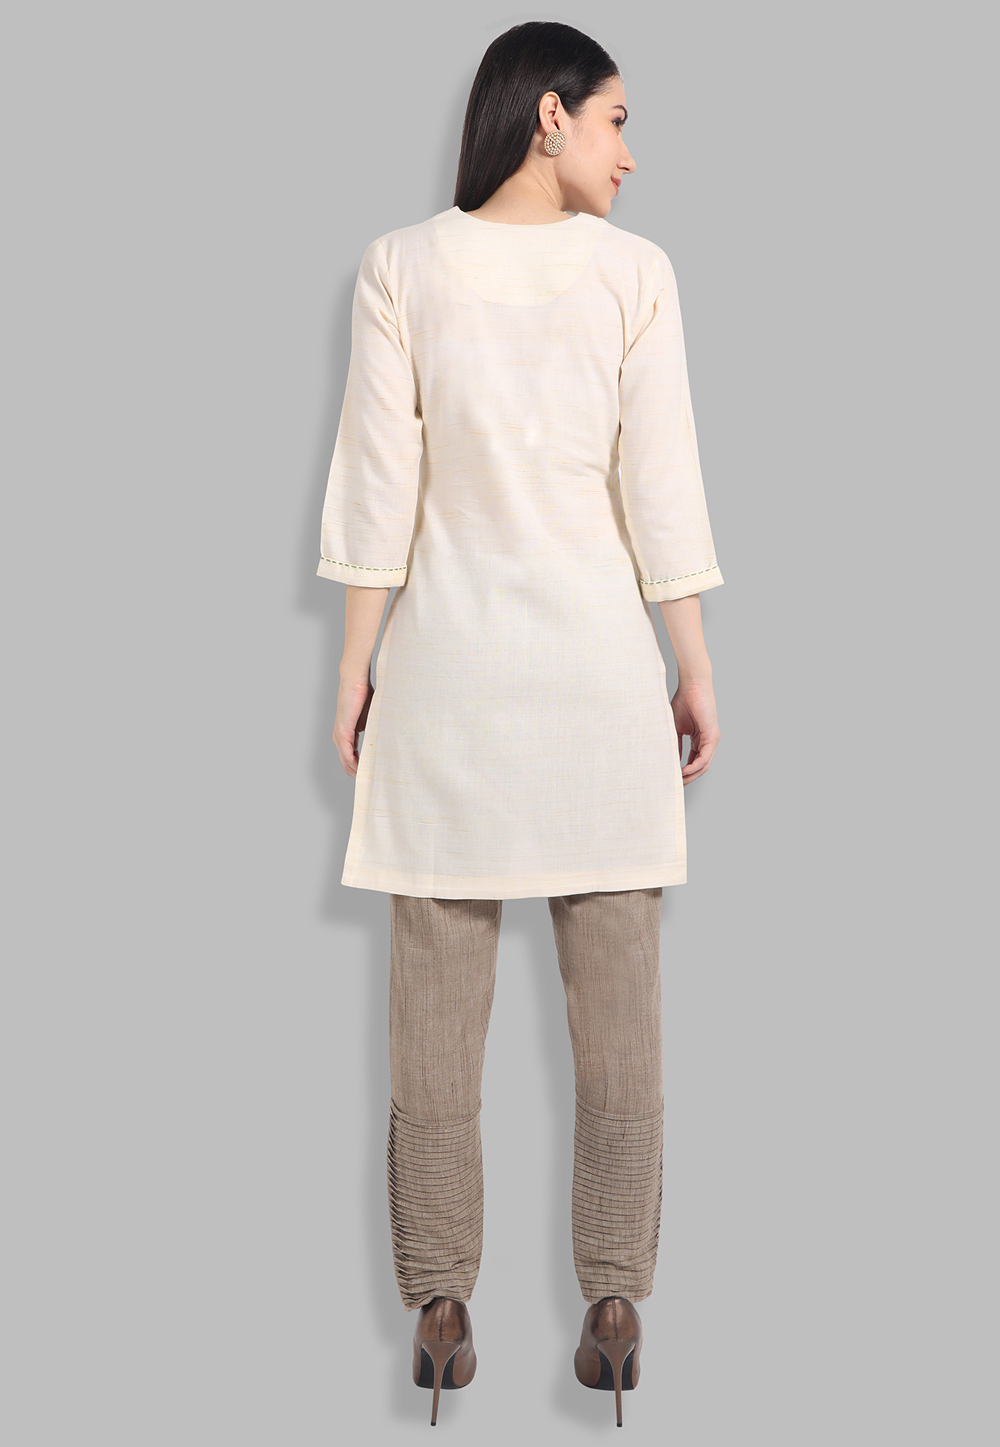 ISHIEQA's White Voil Cotton Chikankari Top - AN0102B | Cotton short tops,  Tops, A line kurti